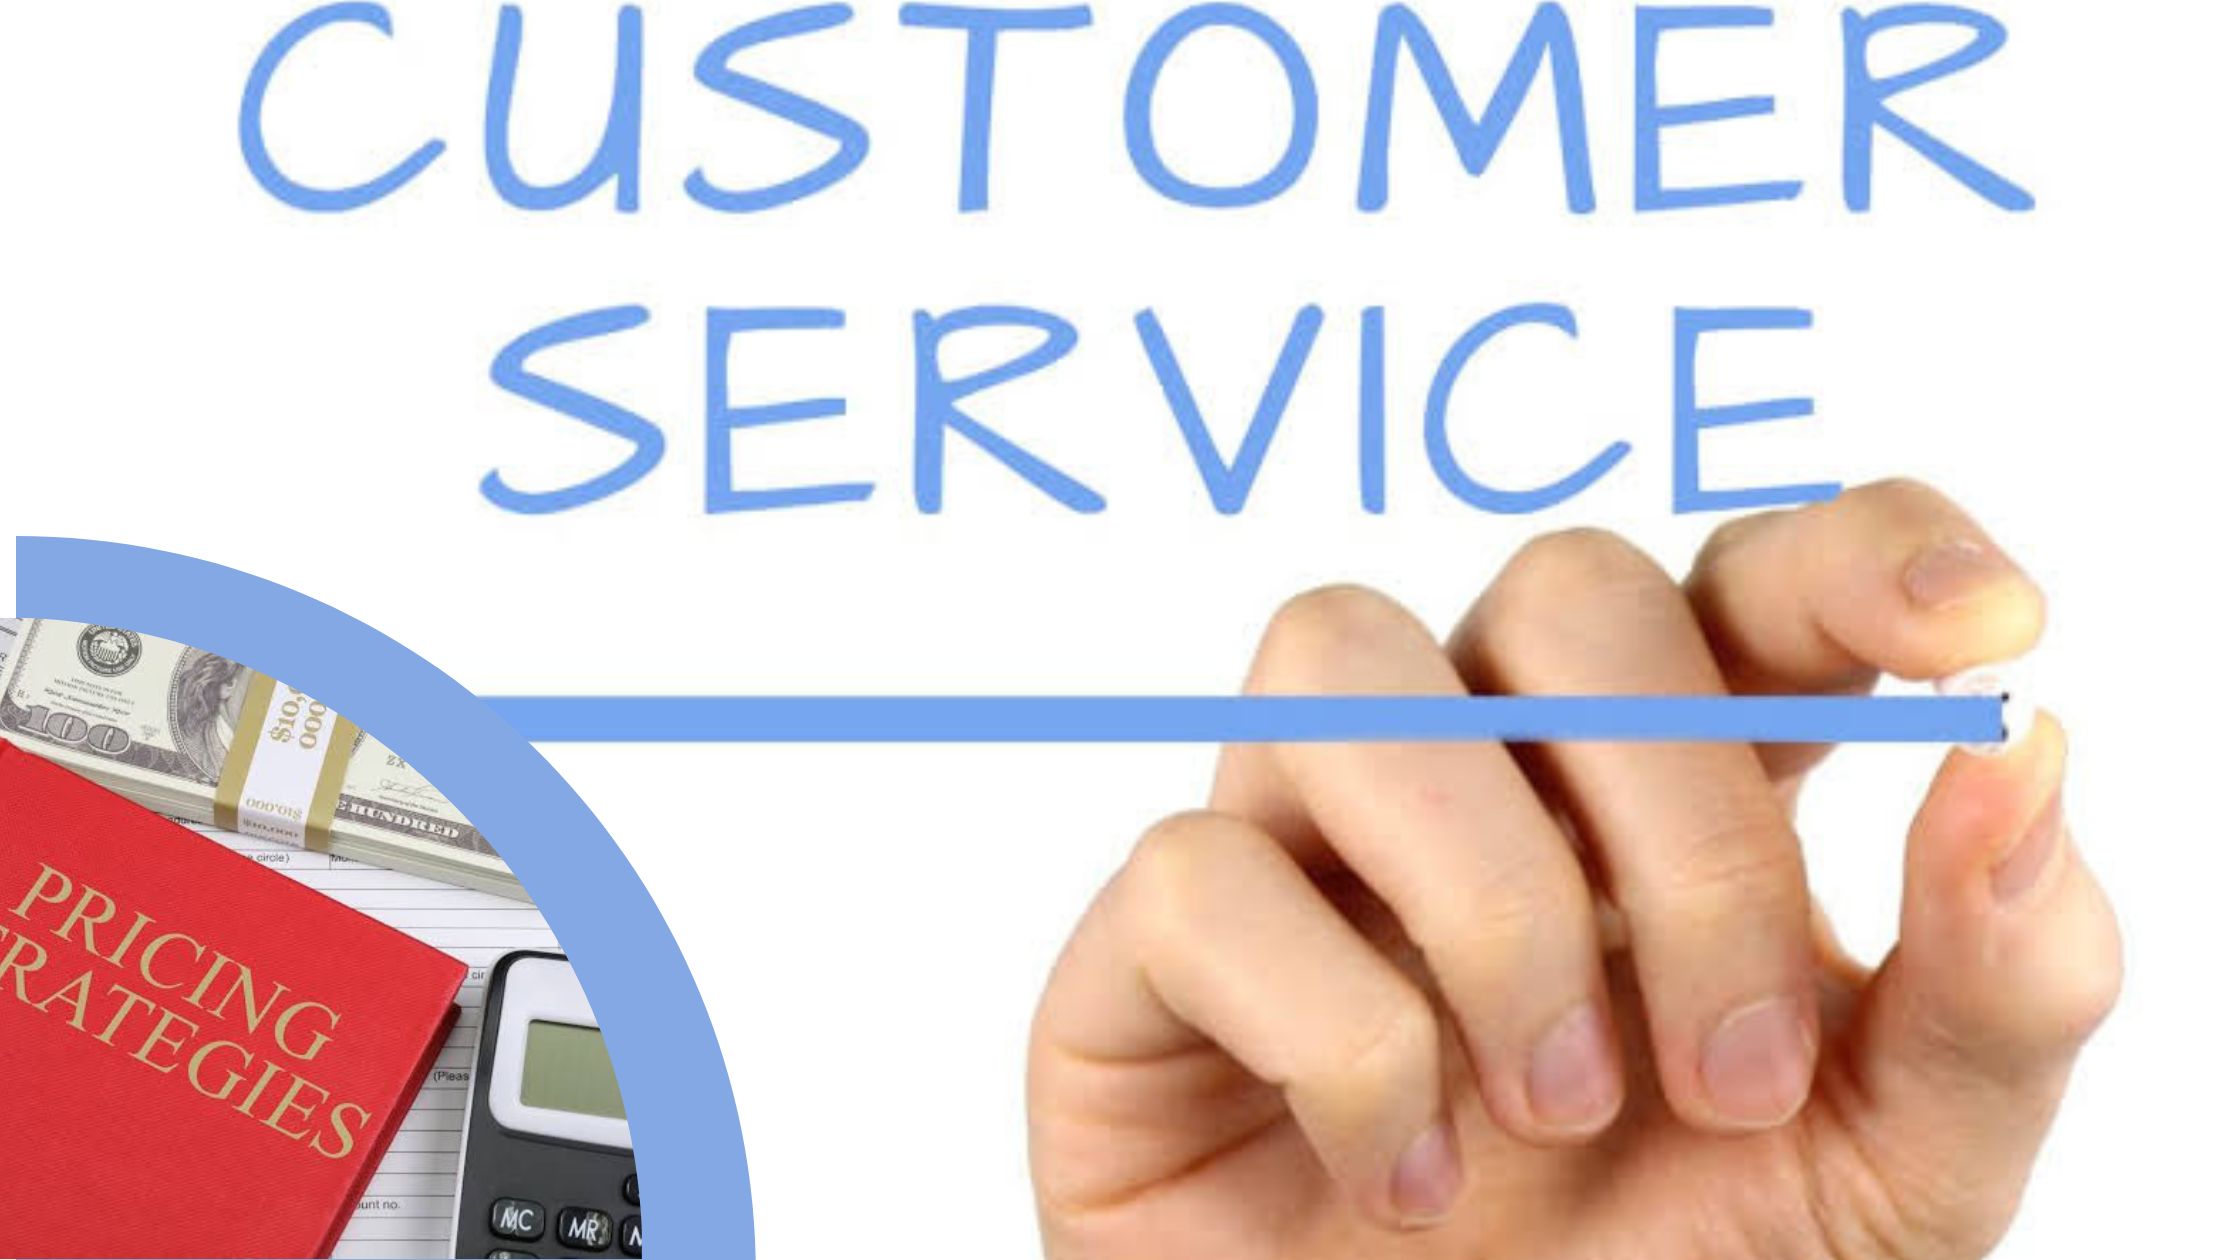 Human Hand Writing Words 'Customer Service '